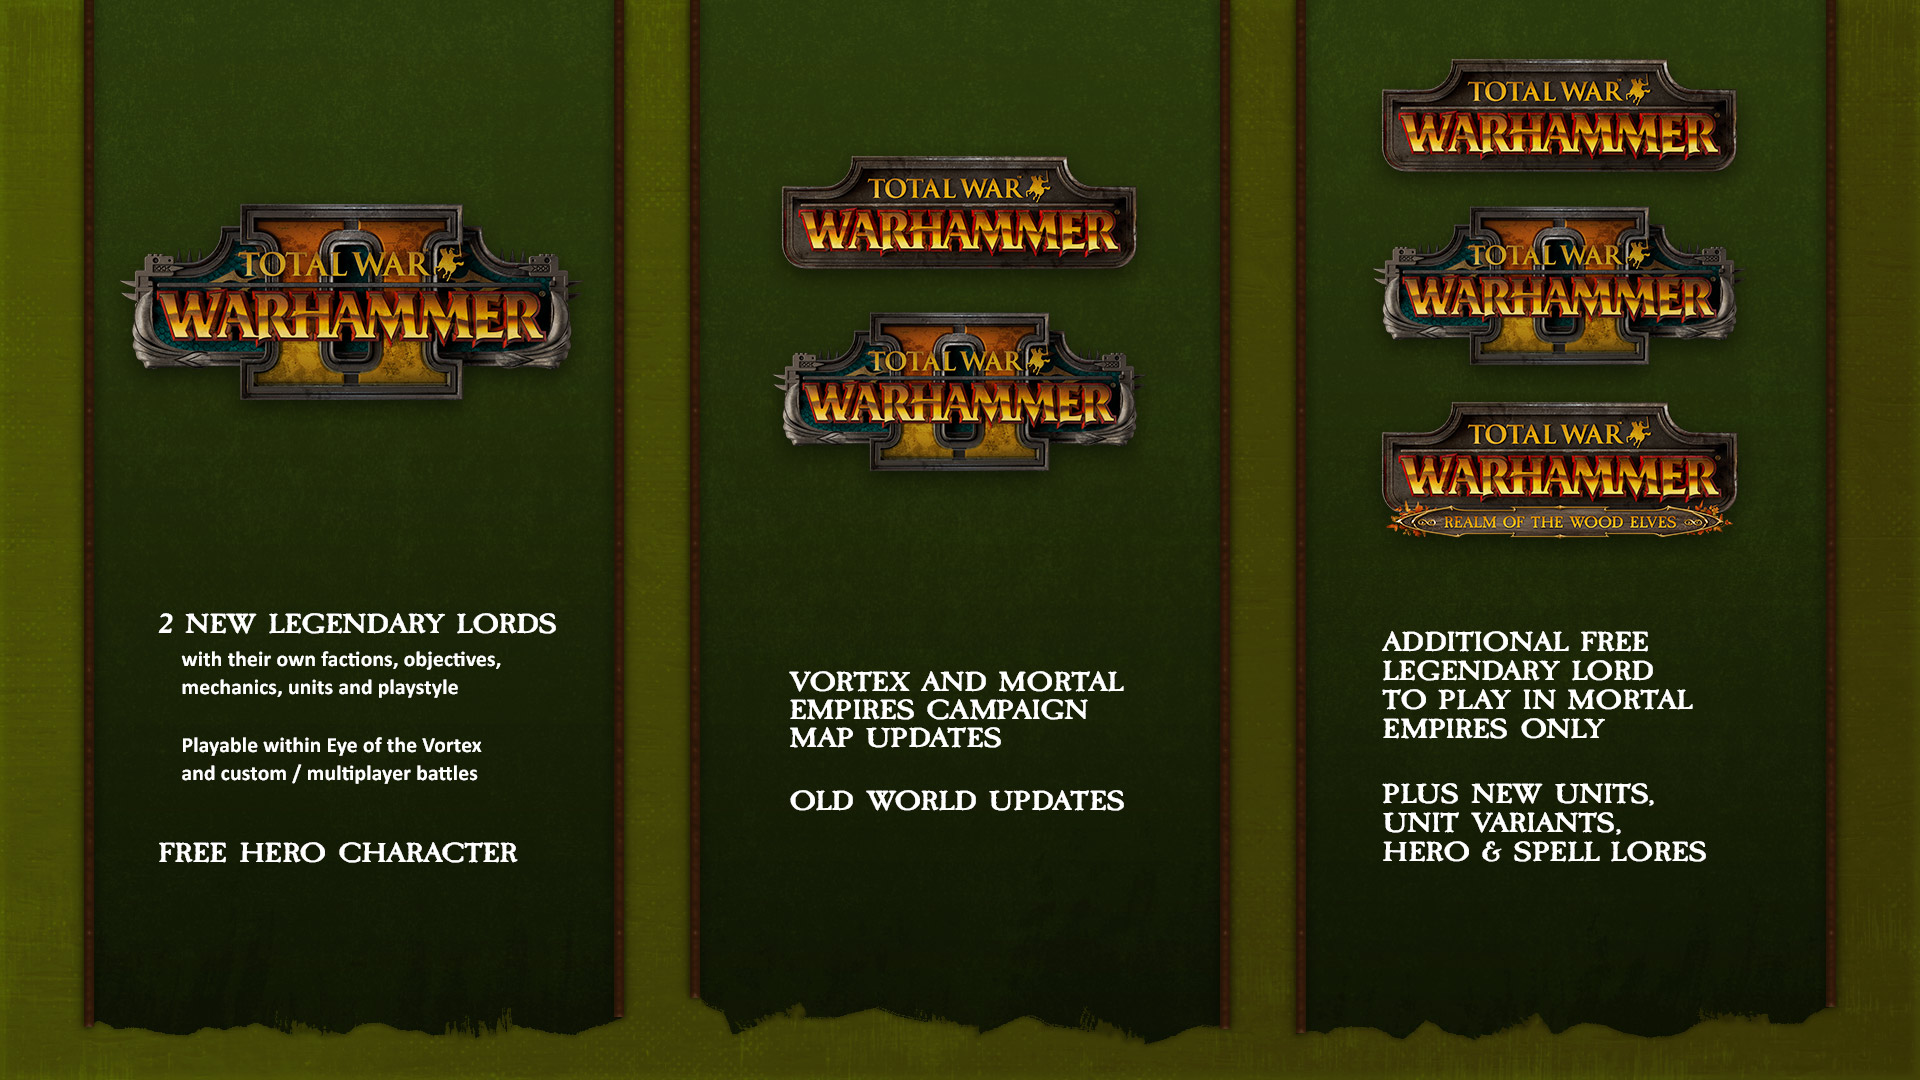 Total War Warhammer Ii Wood Elves Troy And Three Kingdoms Dlc Plans Announced